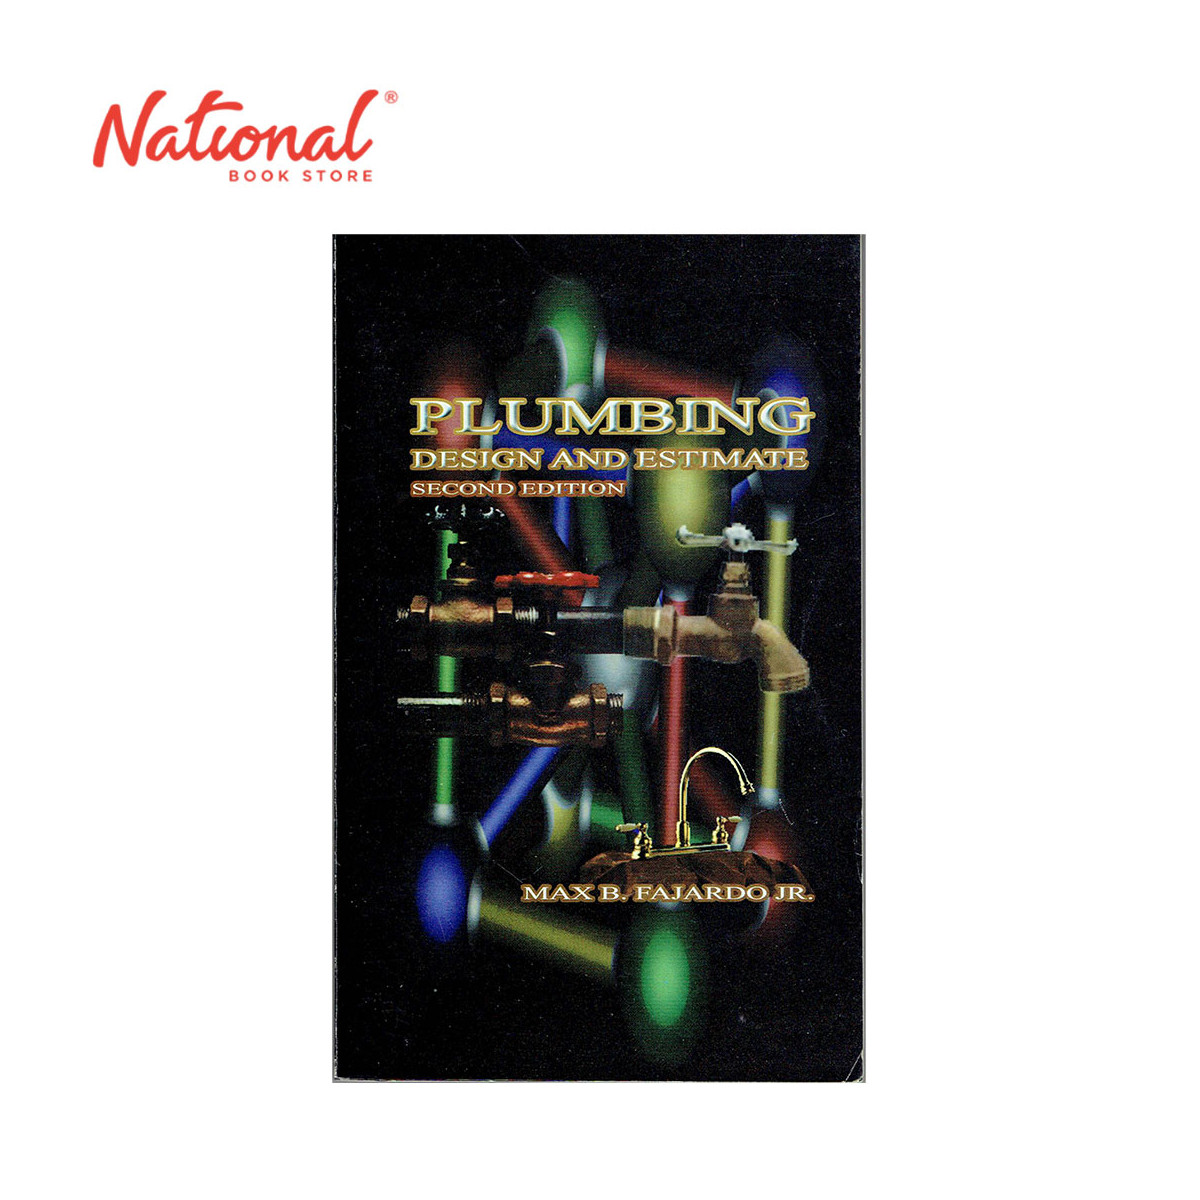 Plumbing Design and Estimate (2nd Edition) by Max Fajardo Jr. - Trade Paperback - College Books